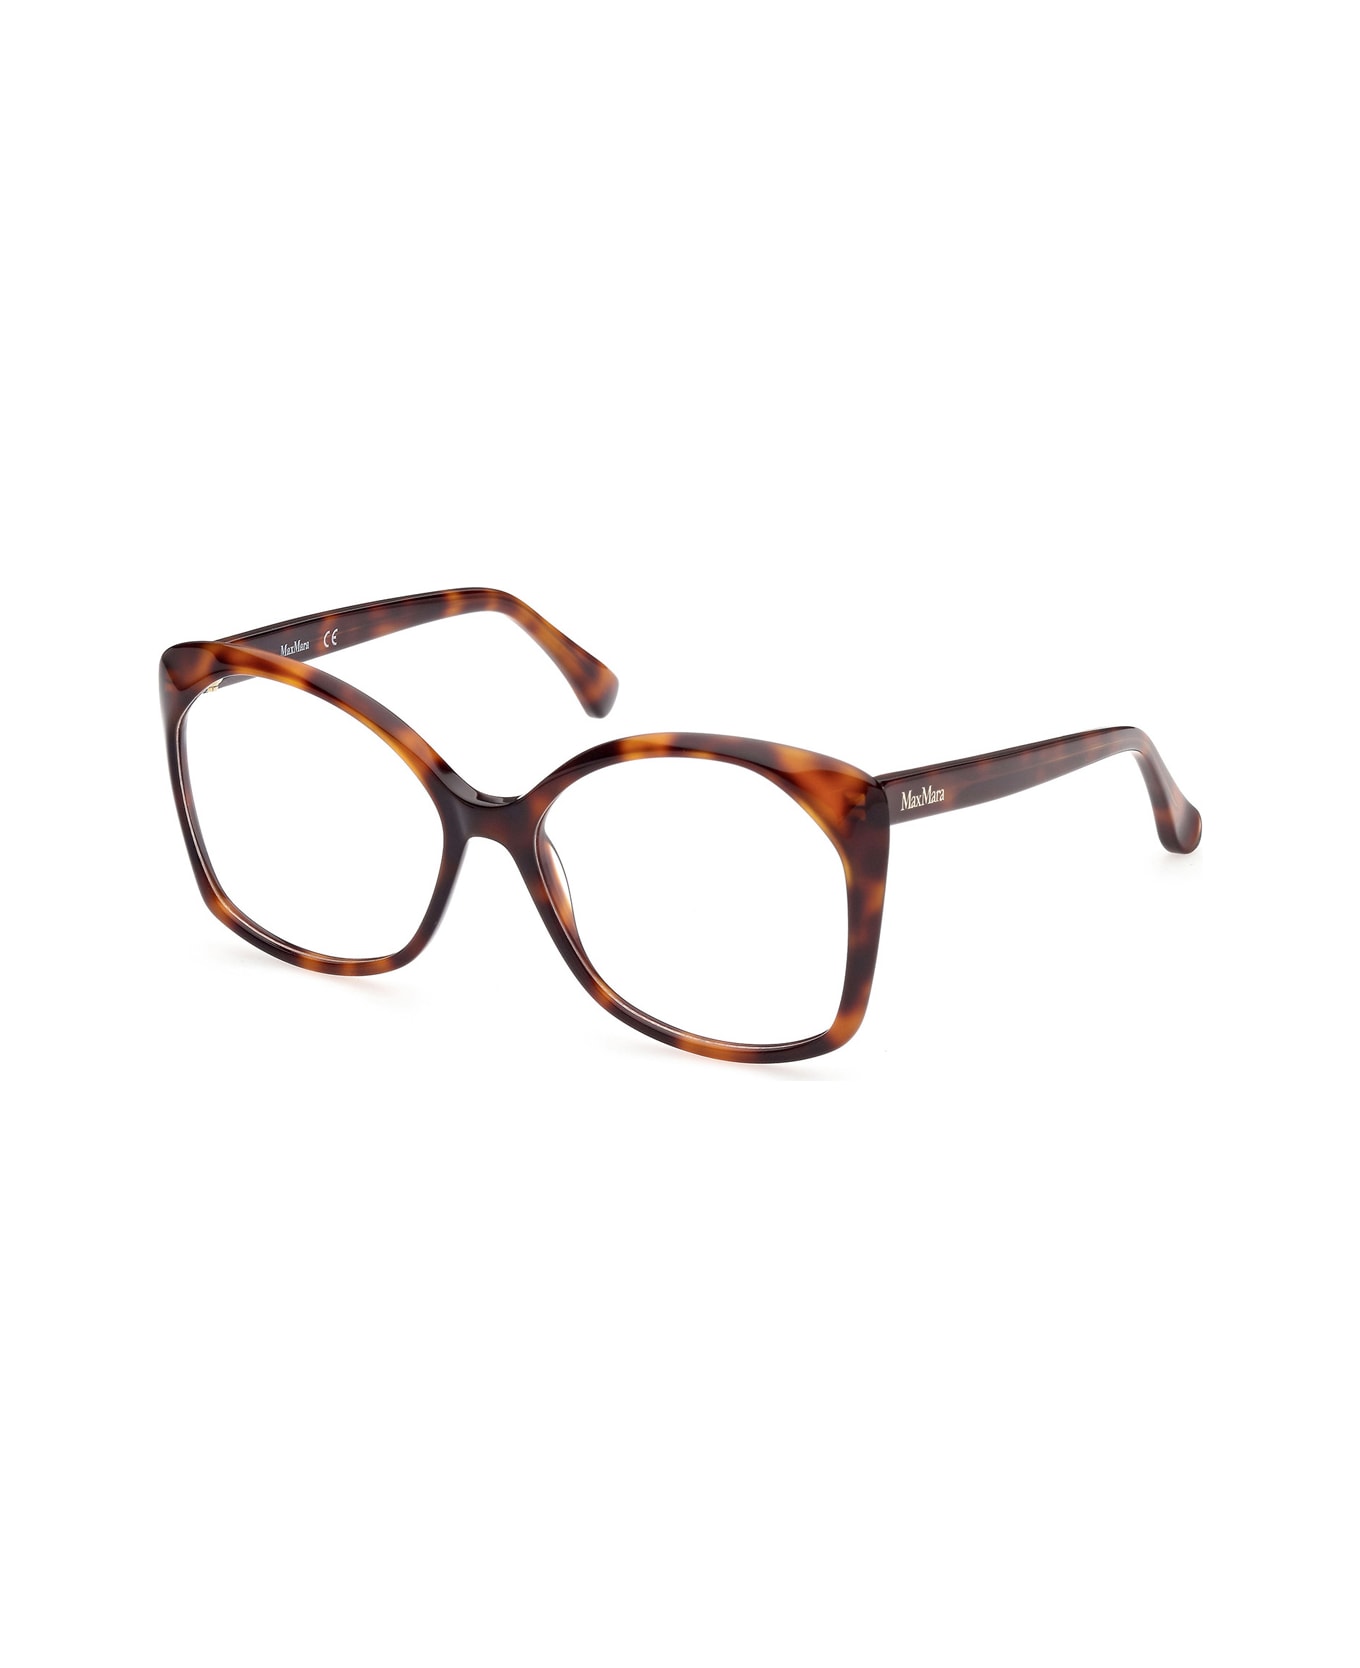 Max Mara Mm5029 Glasses - Marrone